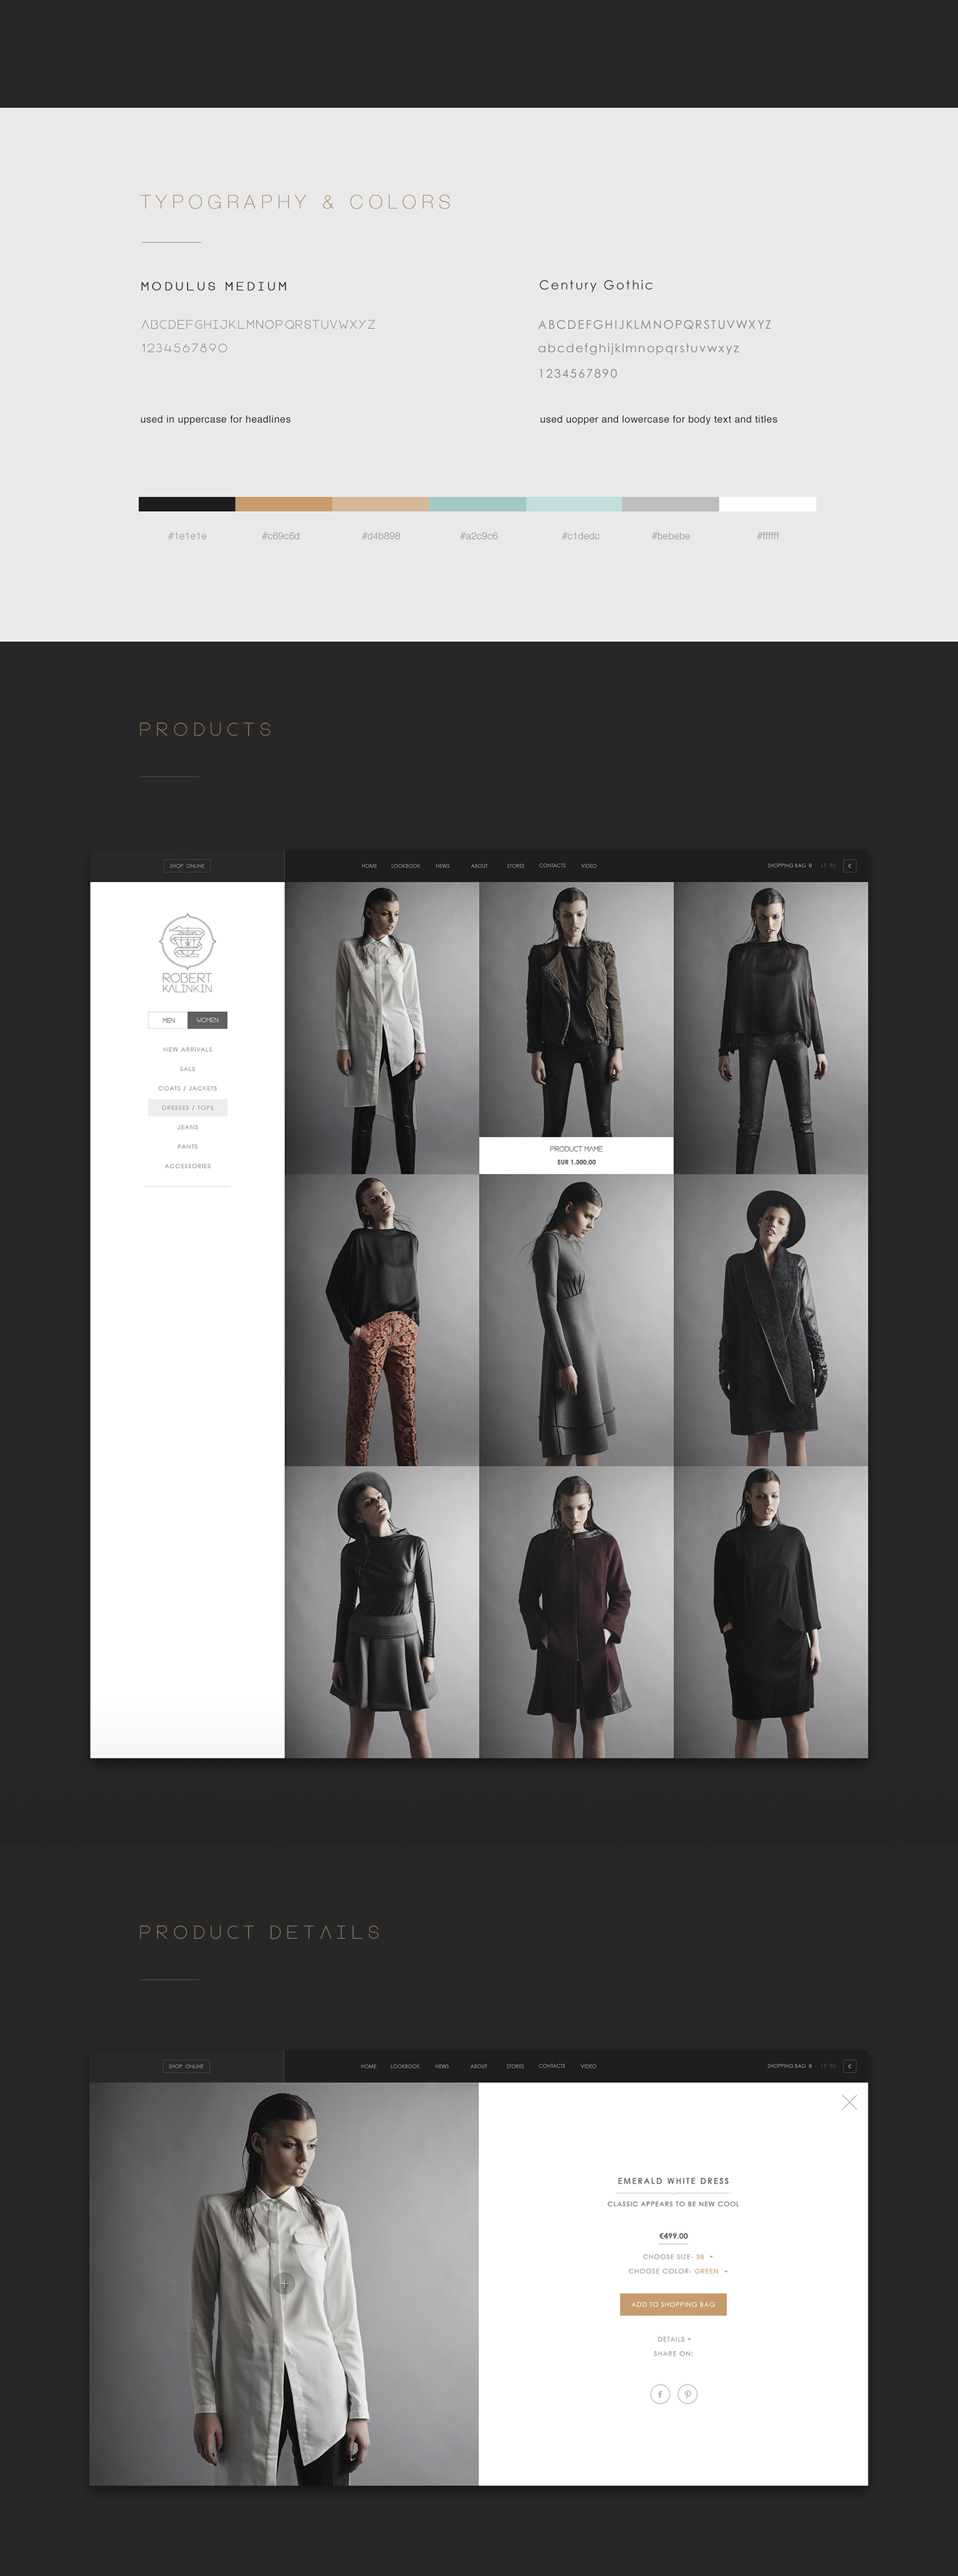 robert kalinkin dark eshop Clothing eComerce grid White photograpy big images black and white luxury shop Catalogue minimal